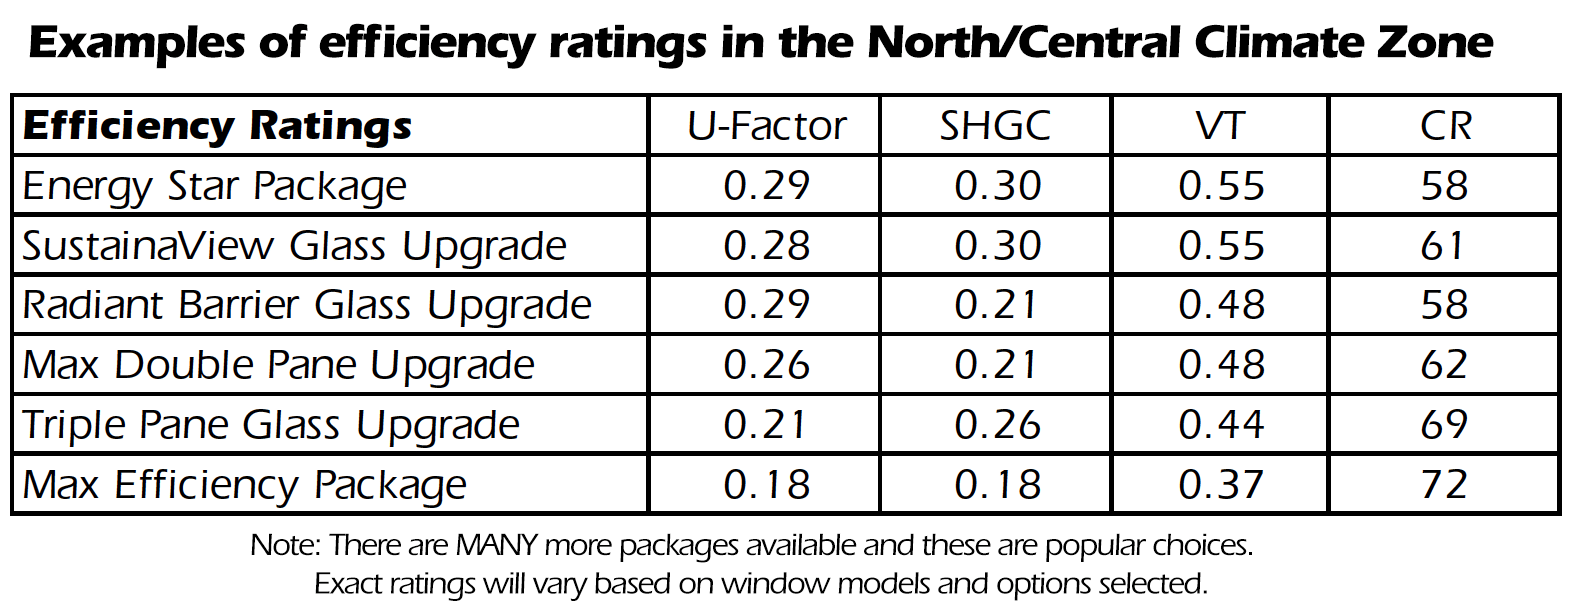 Energy efficiency ratings in Kansas City for popular window options.